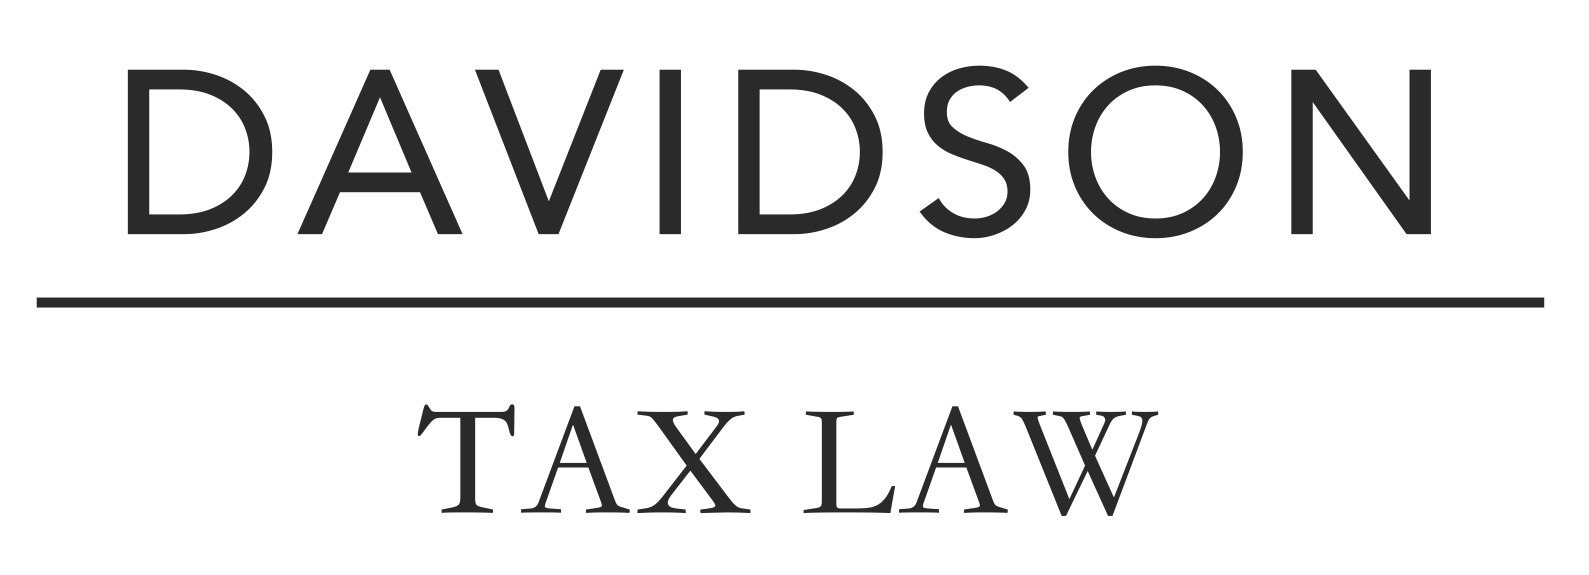 Davidson Tax Law